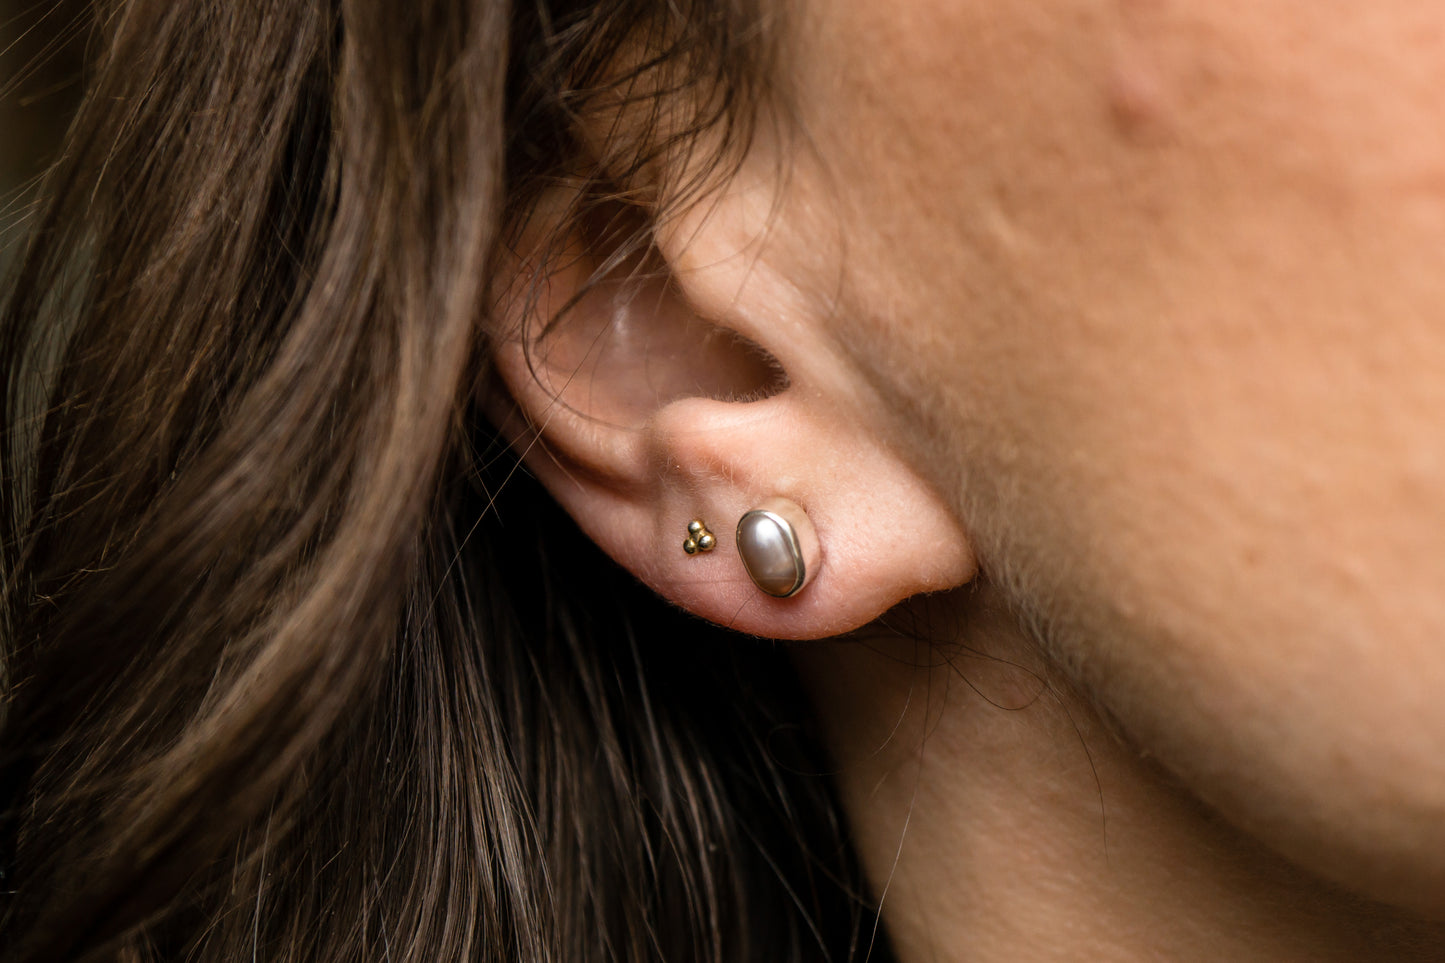 Pearl earrings - 925 sterling silver